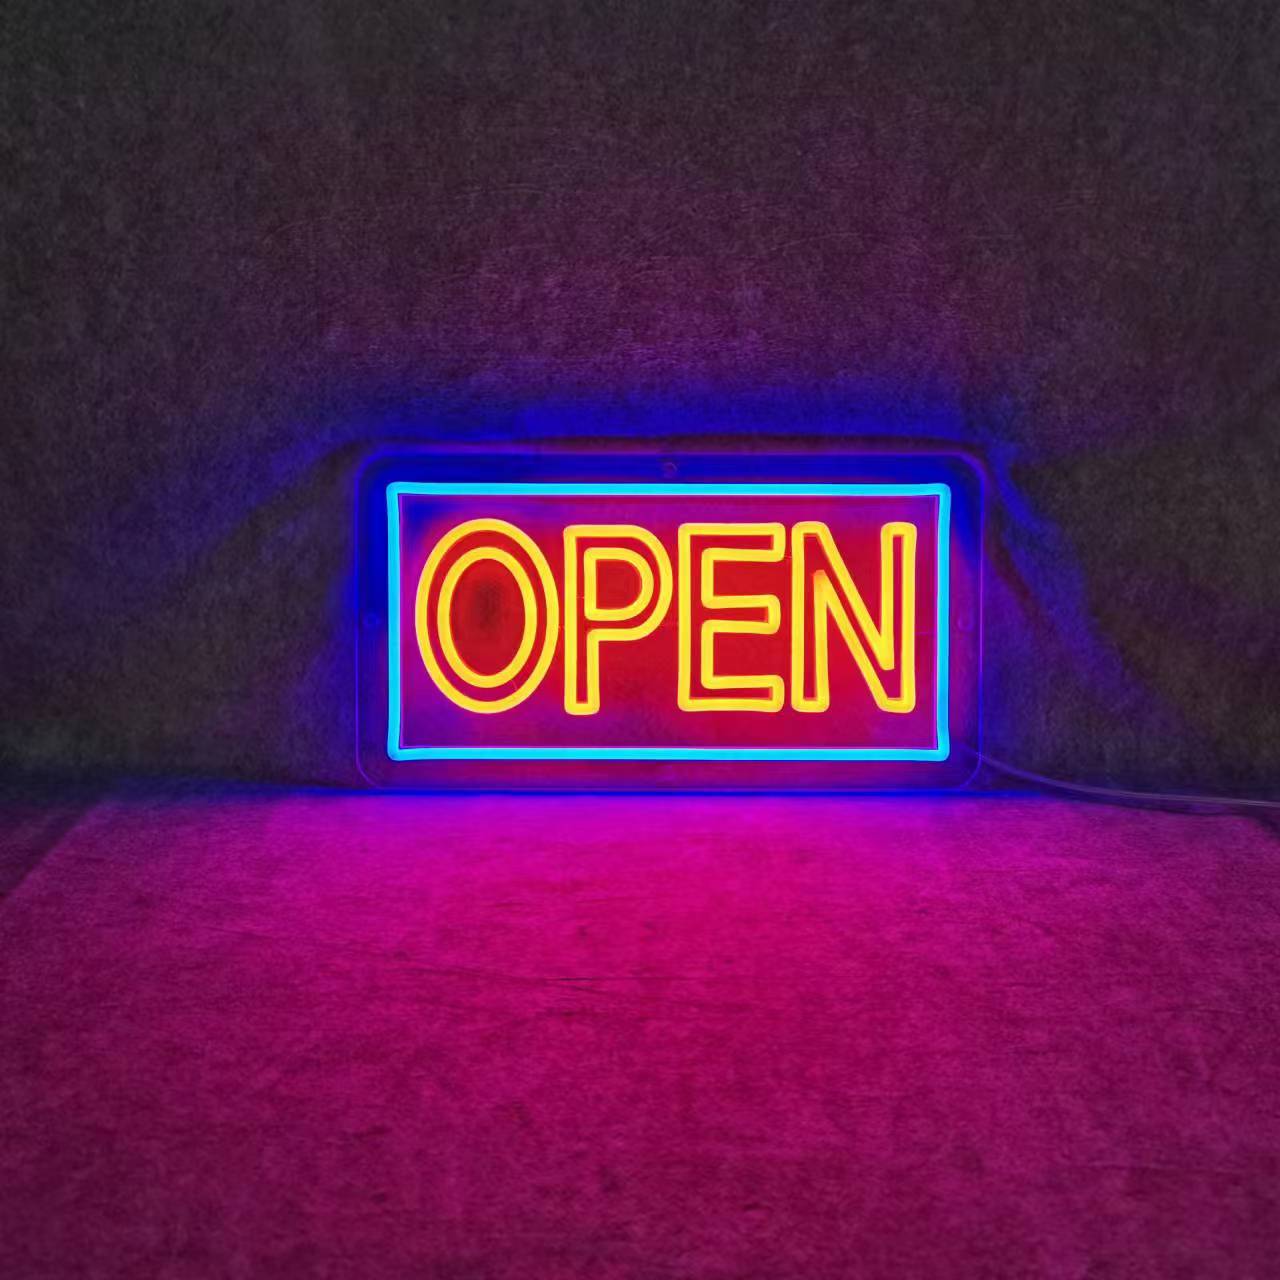 Open Semn de neon